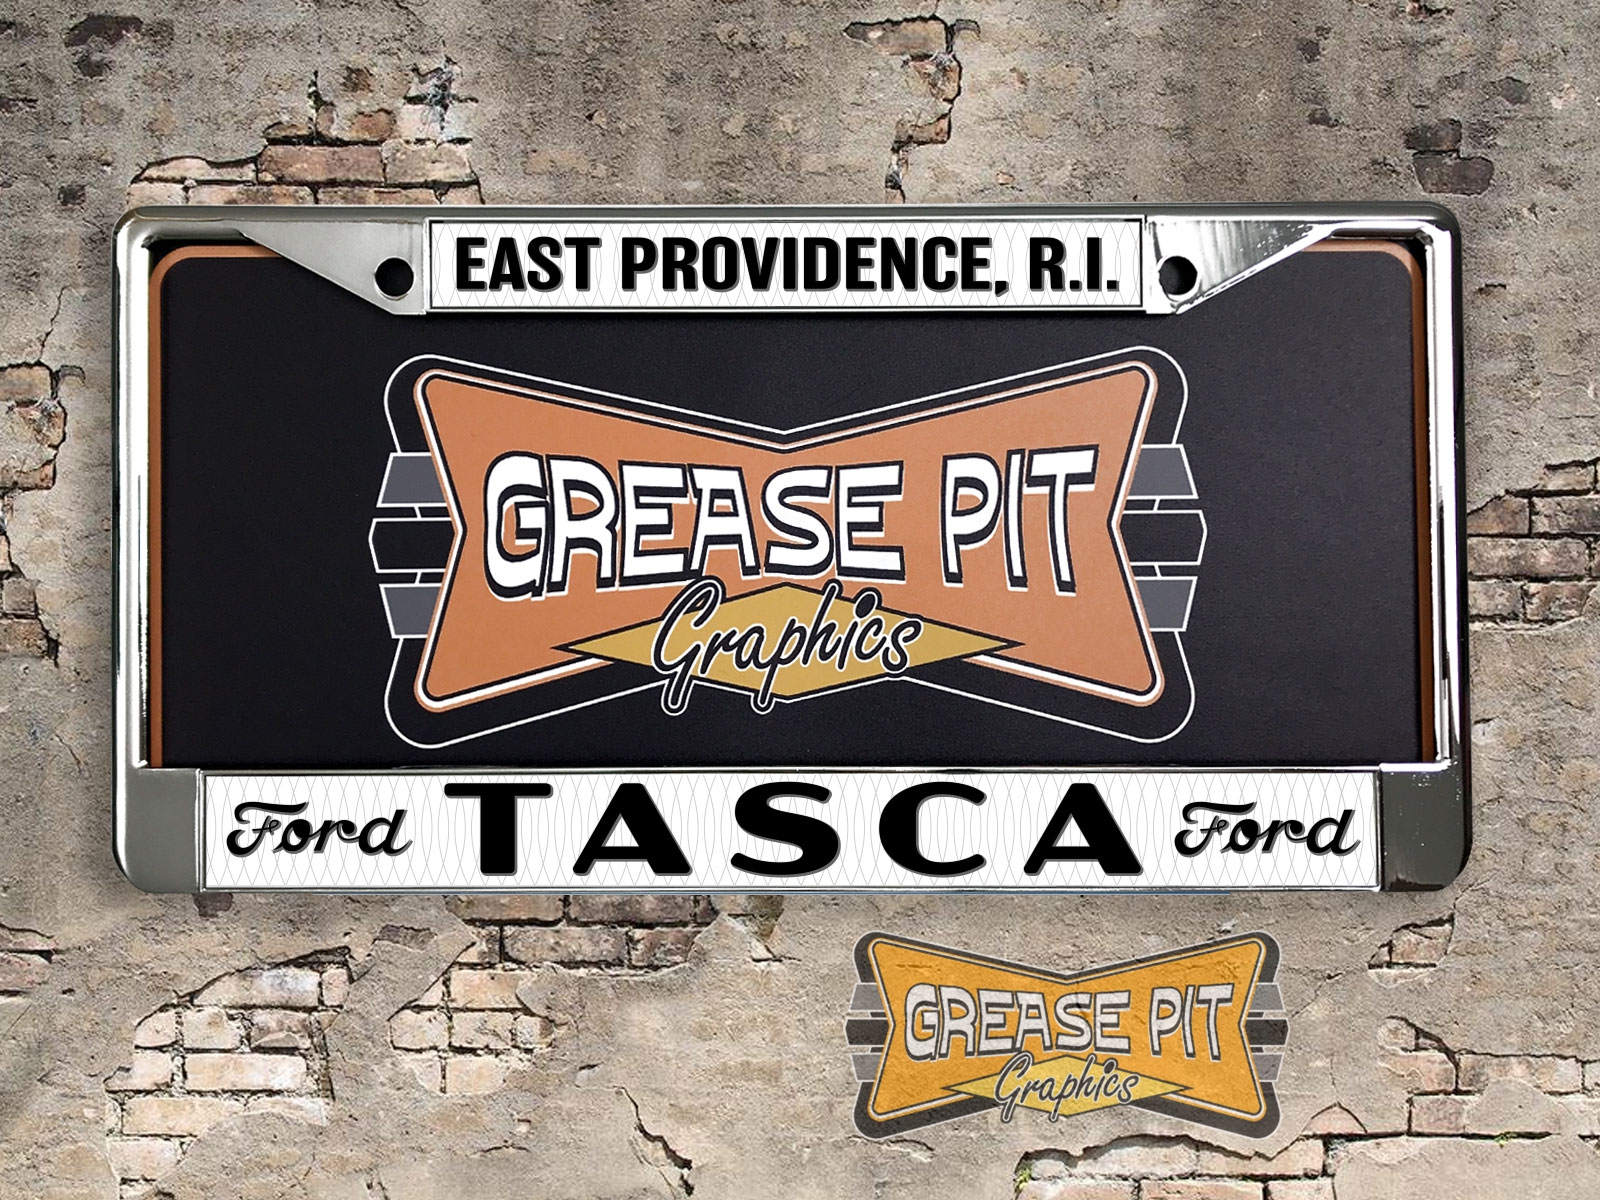 Tasca Ford East Providence License Plate Frame White and Black